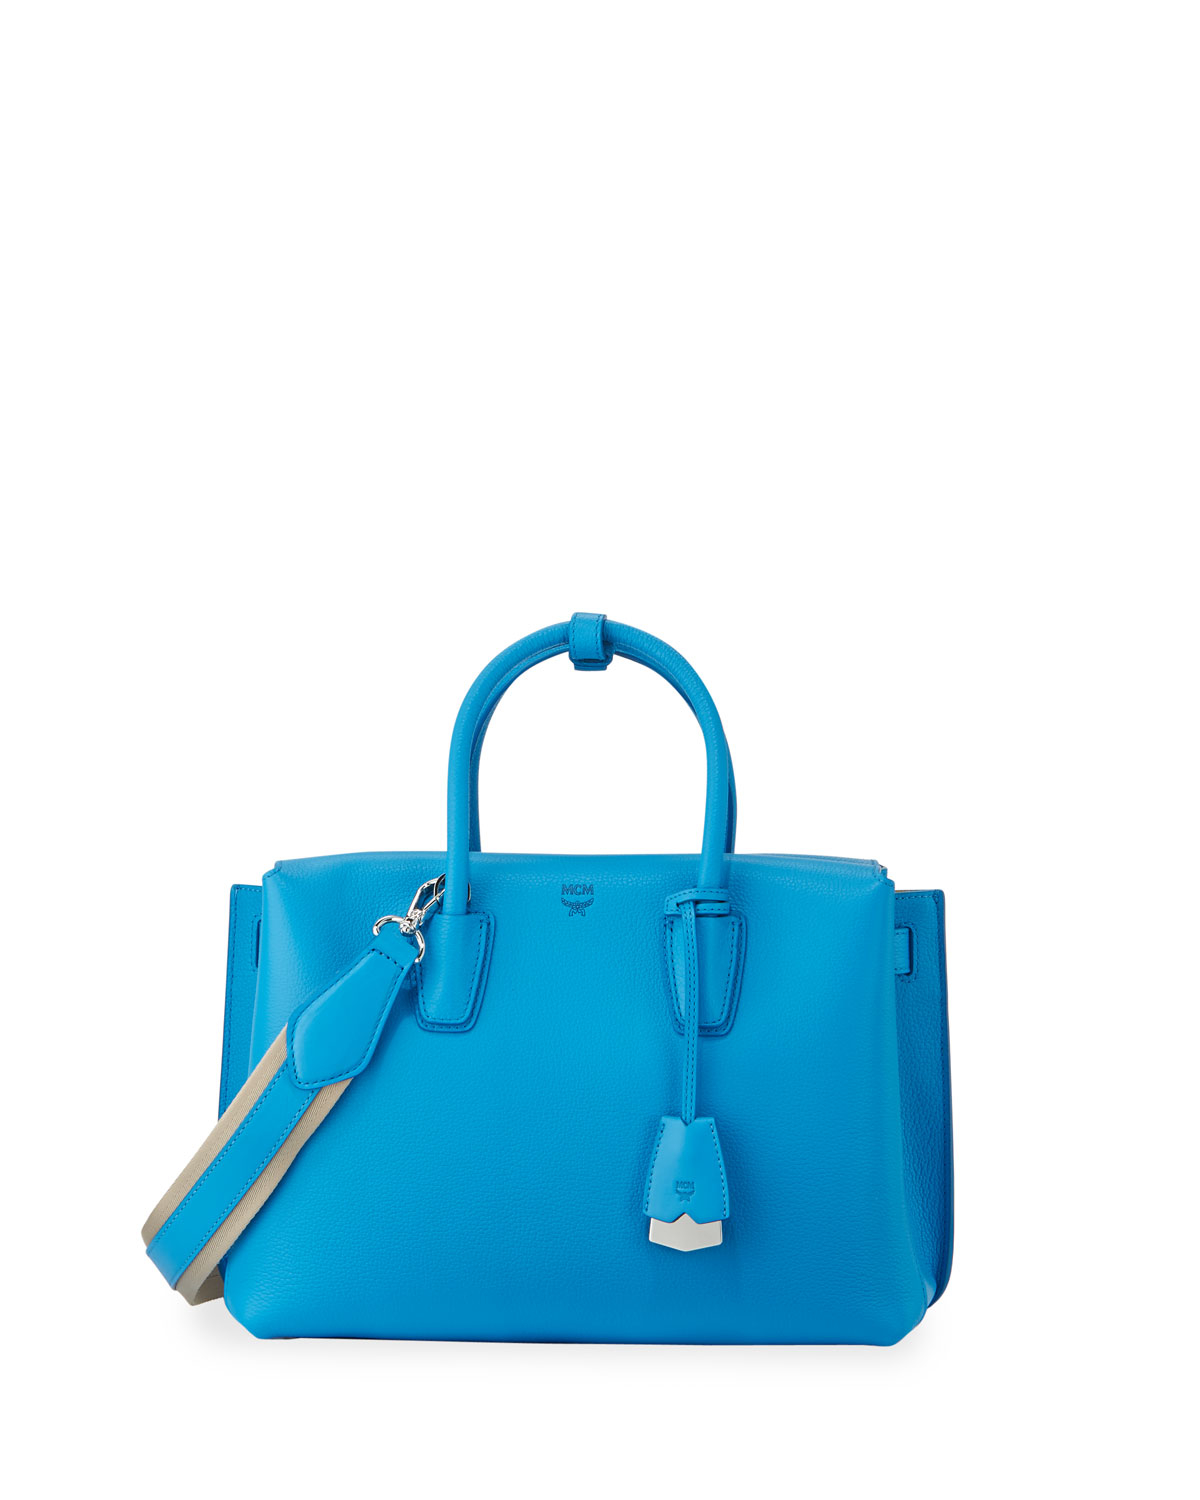 Lyst - Mcm Milla Medium Leather Tote Bag in Blue